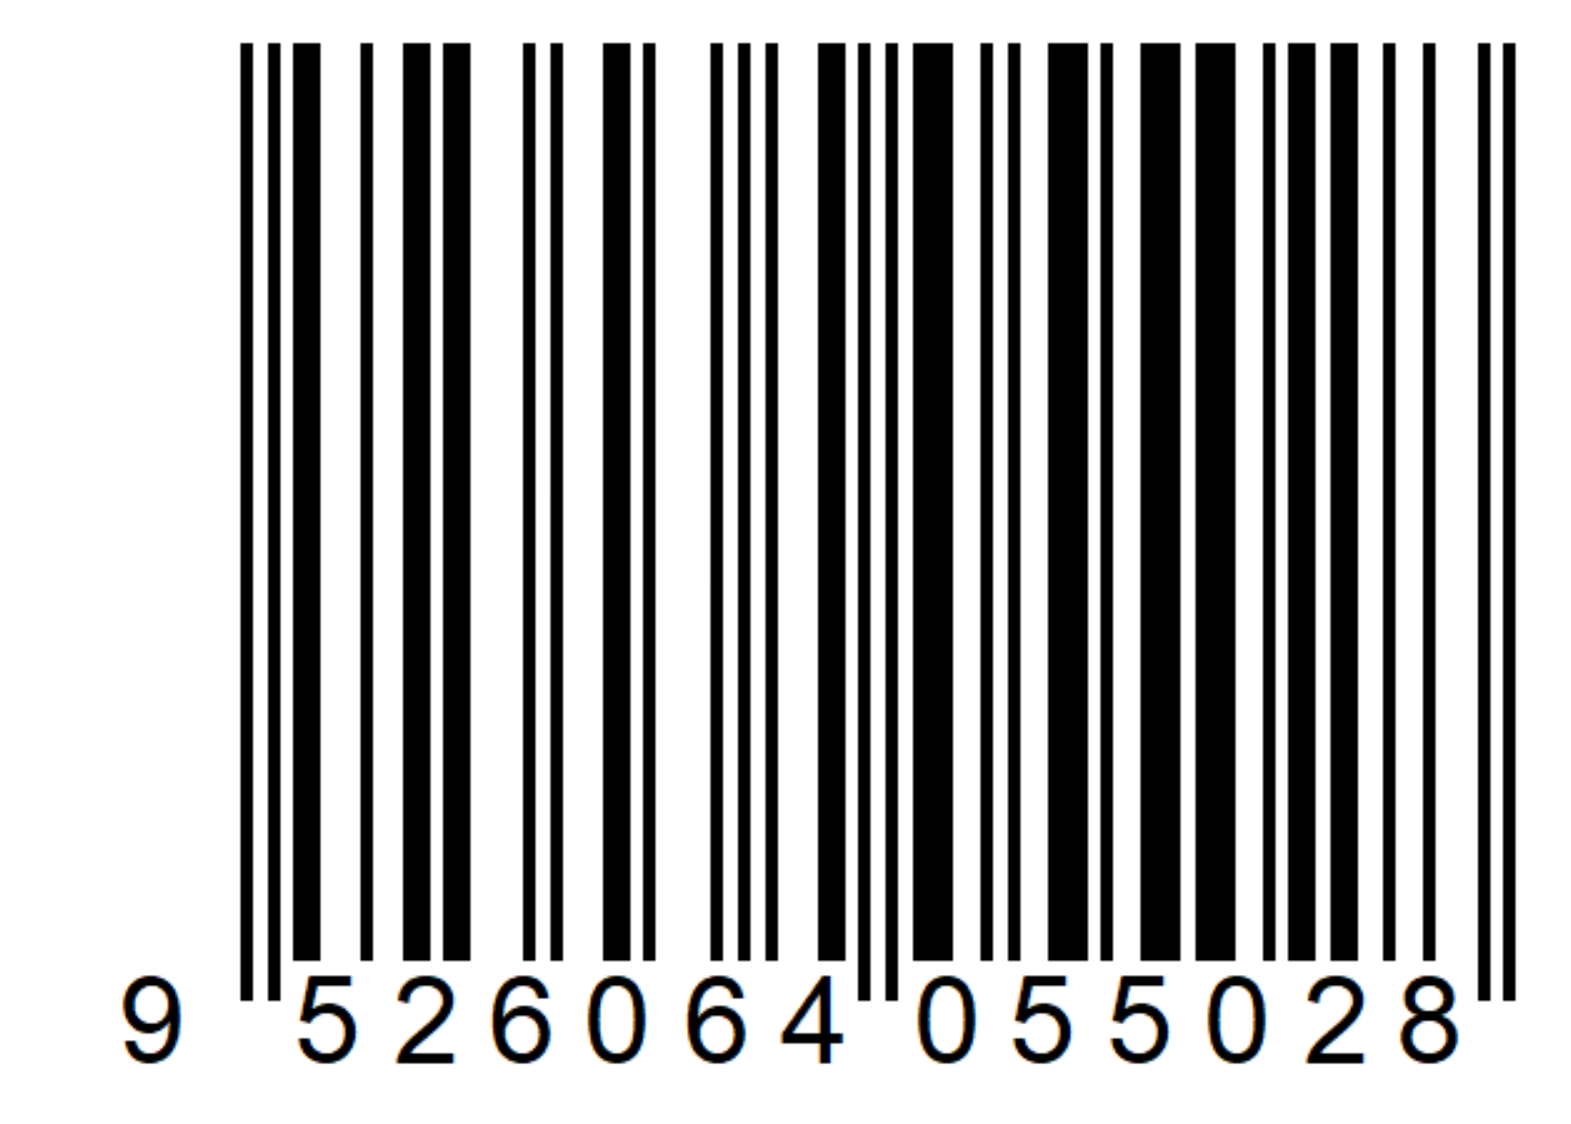 An EAN-13 barcode (the classic 'barcode')